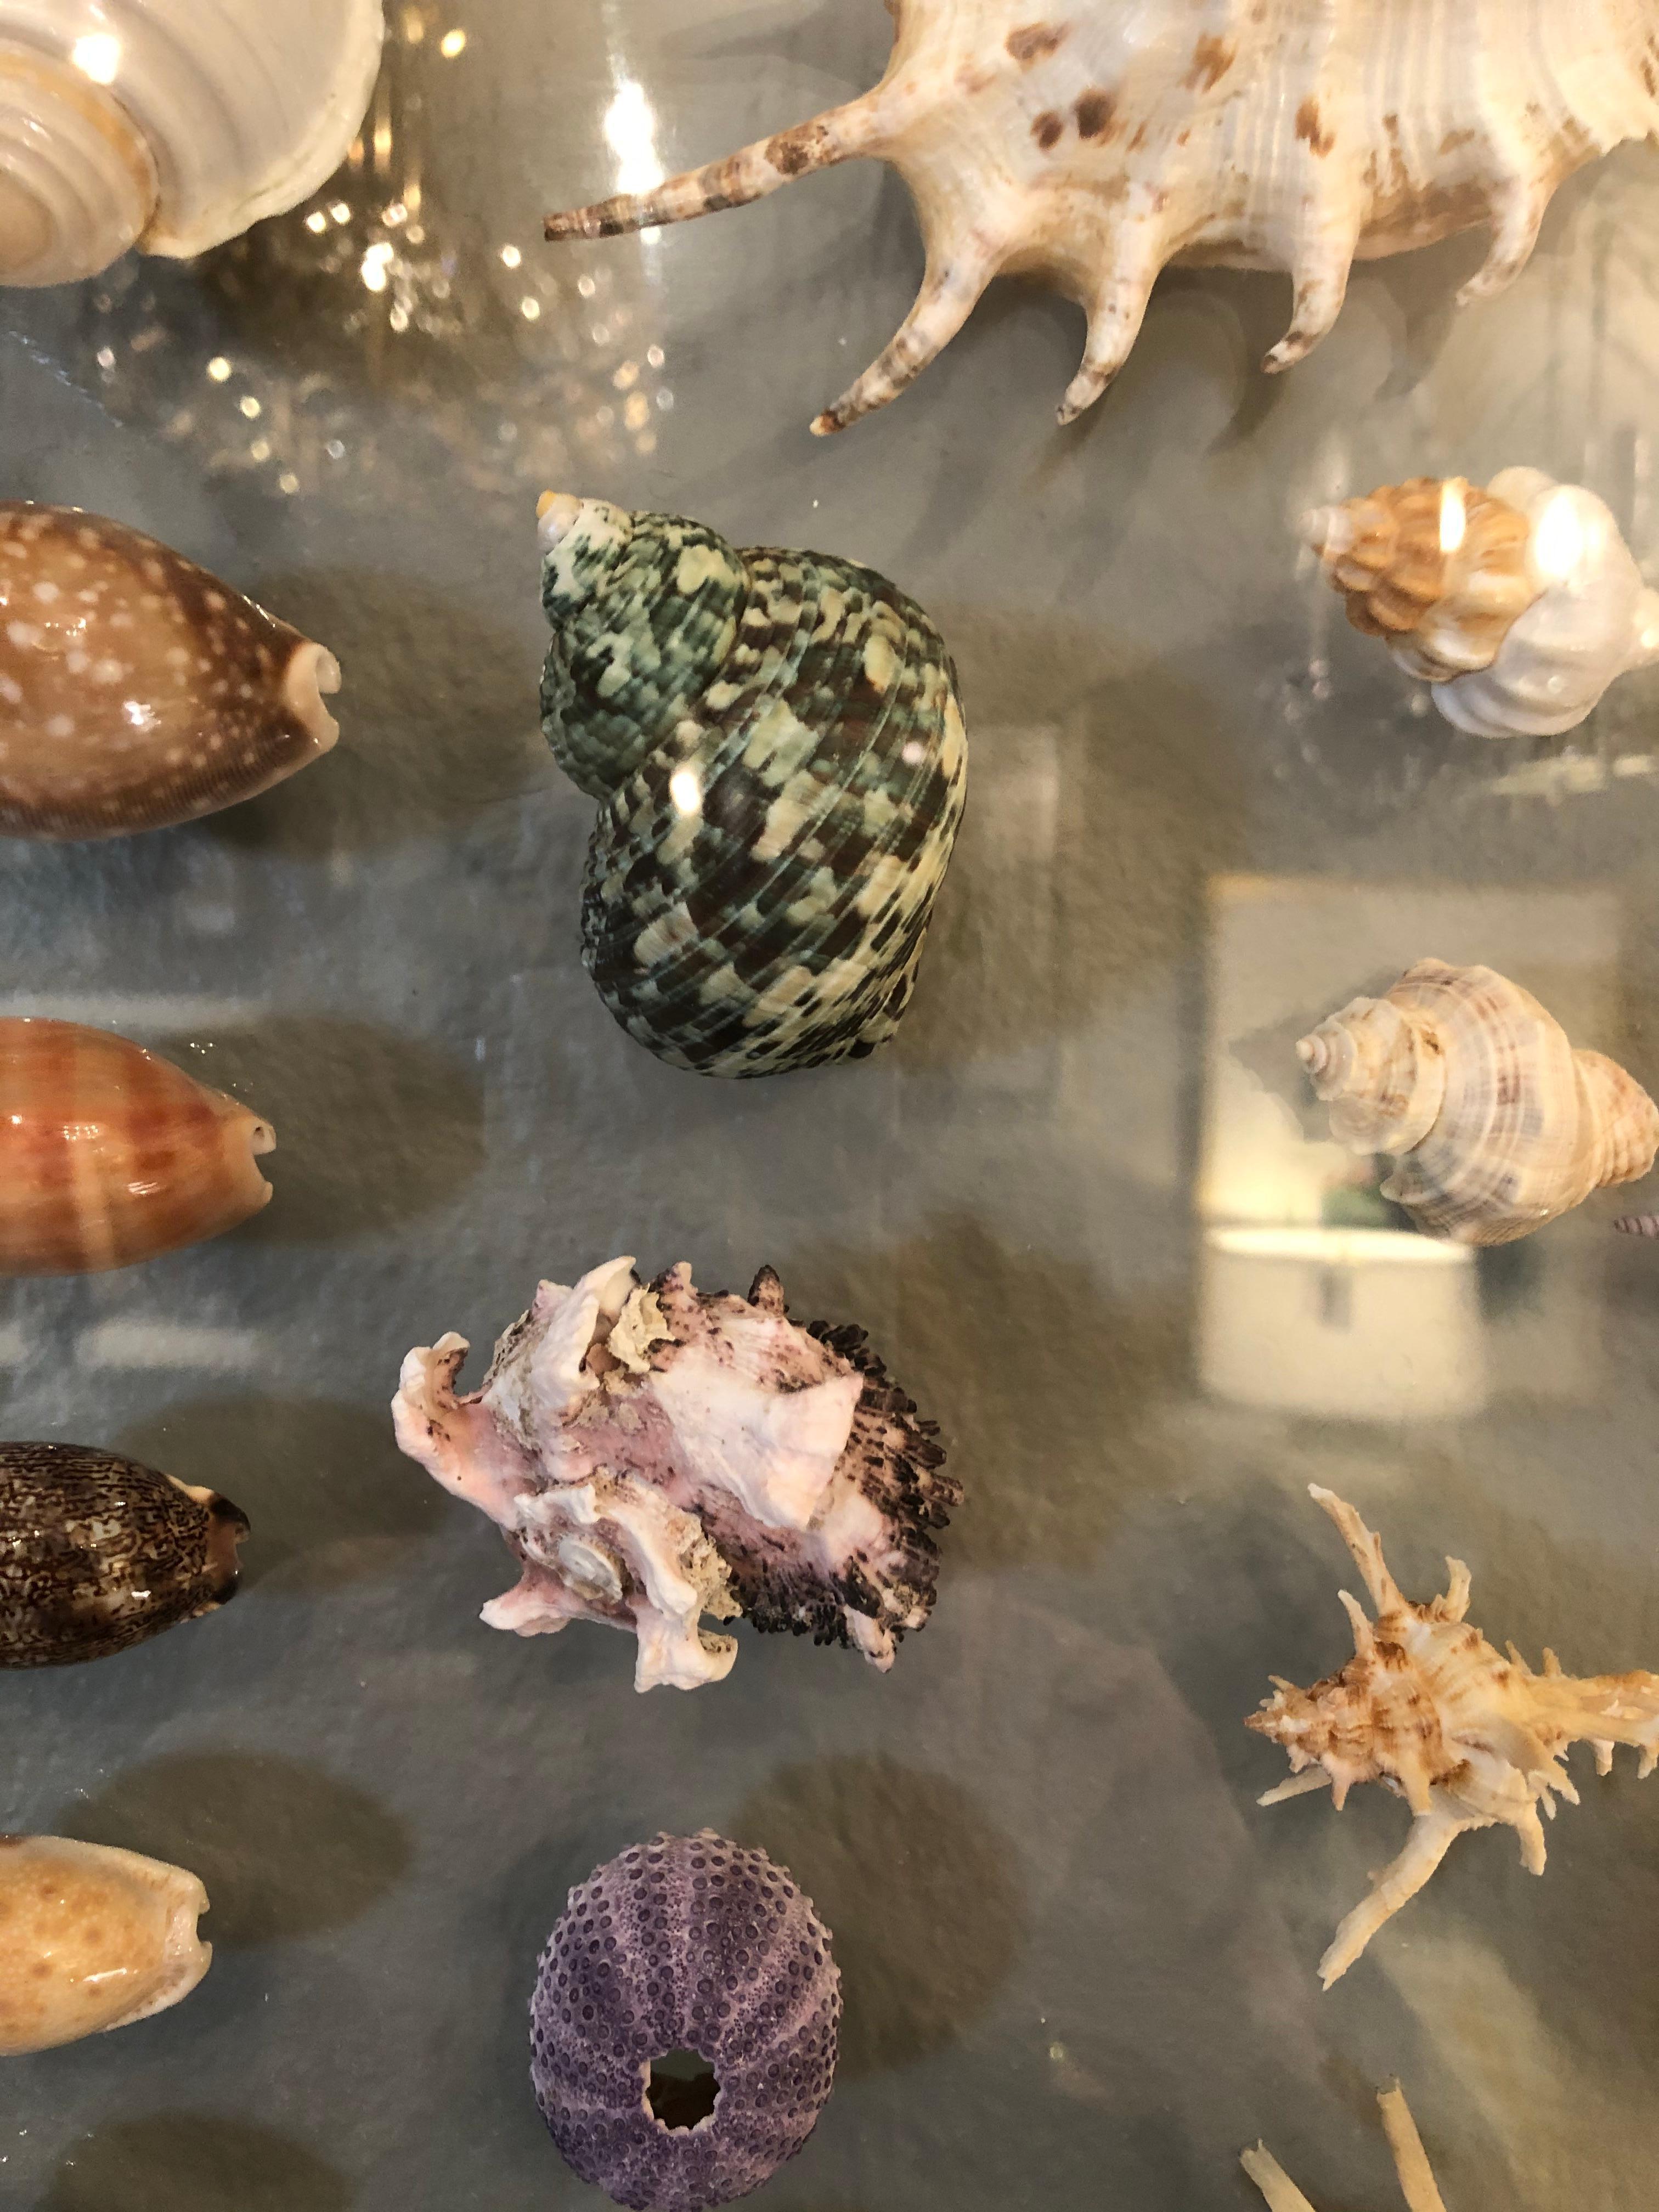 Impressive shadowbox art displaying 74 gorgeous glistening seashell specimens within 2 glass panels.